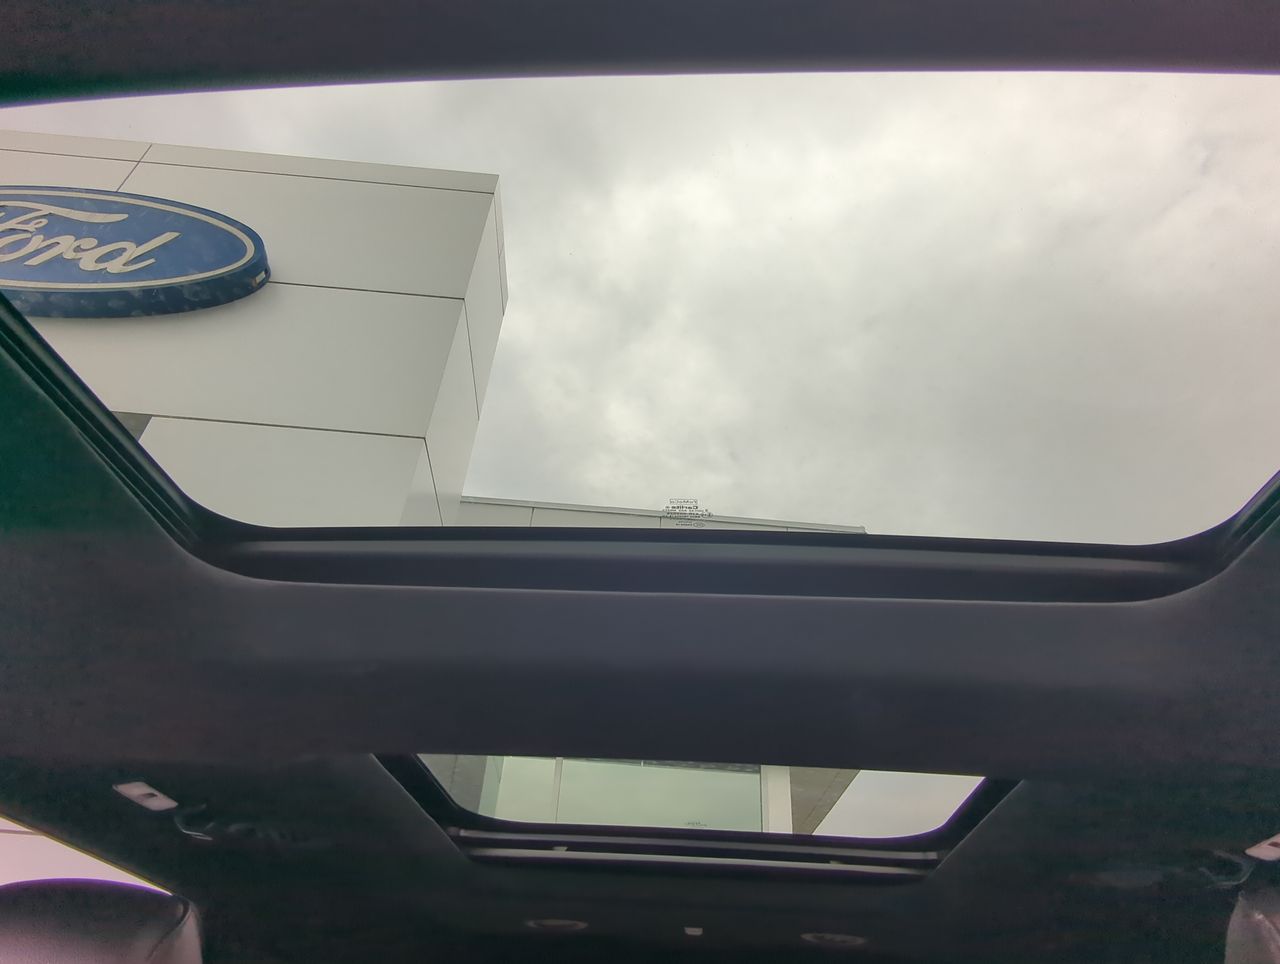 2019 Ford Explorer - 21631A Full Image 22